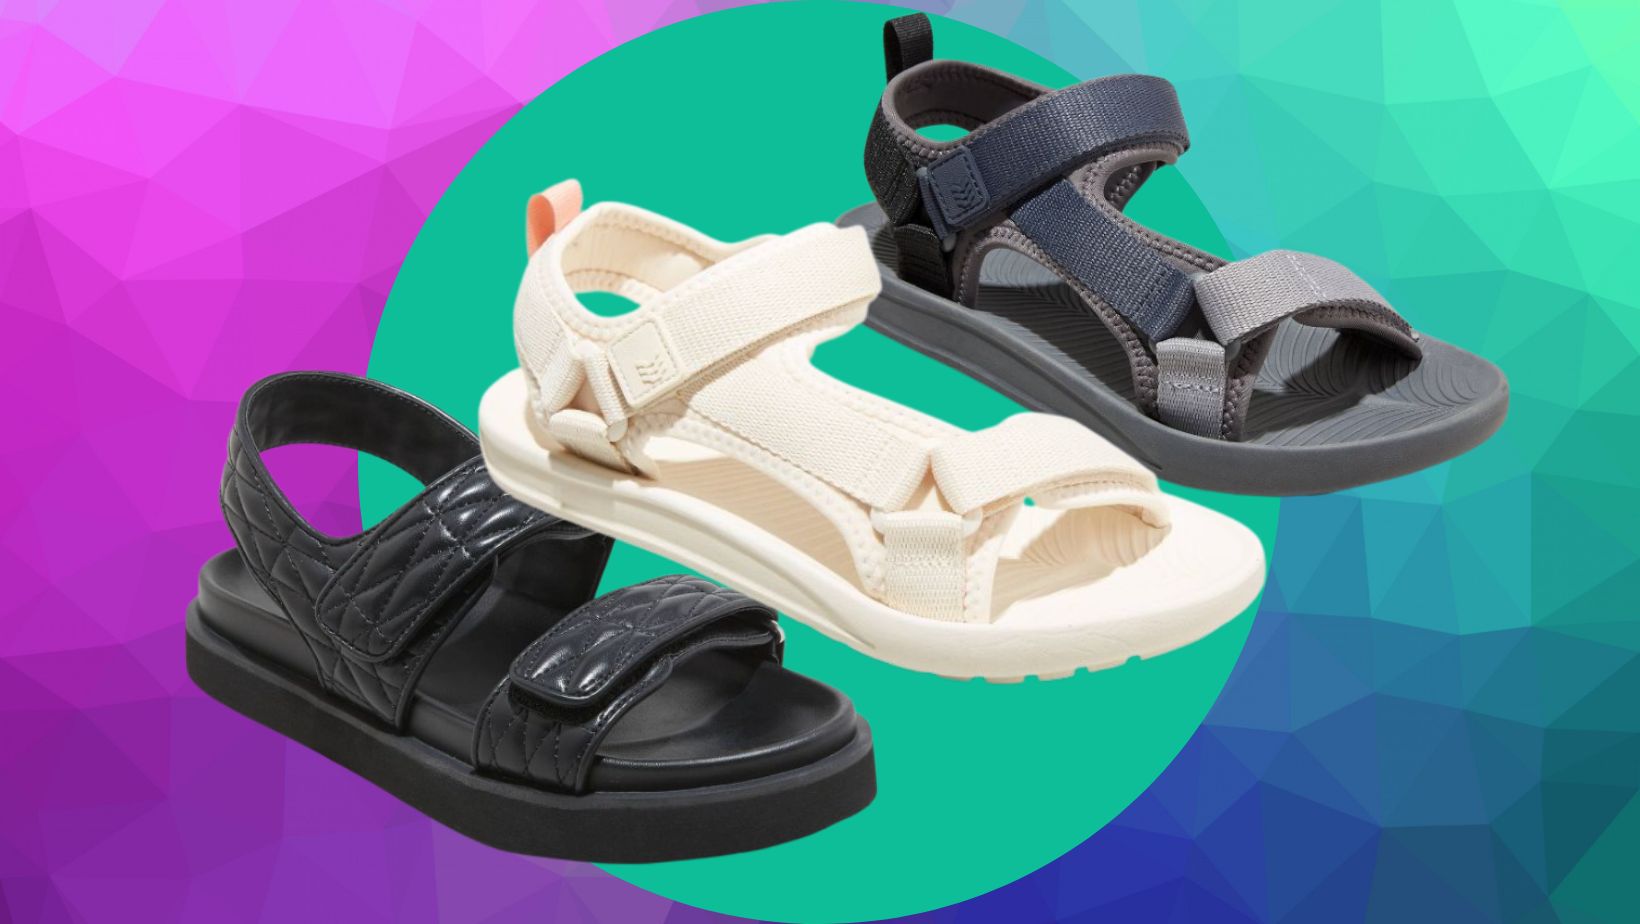 Shop Women's Lace Up Sandals up to 90% Off | DealDoodle